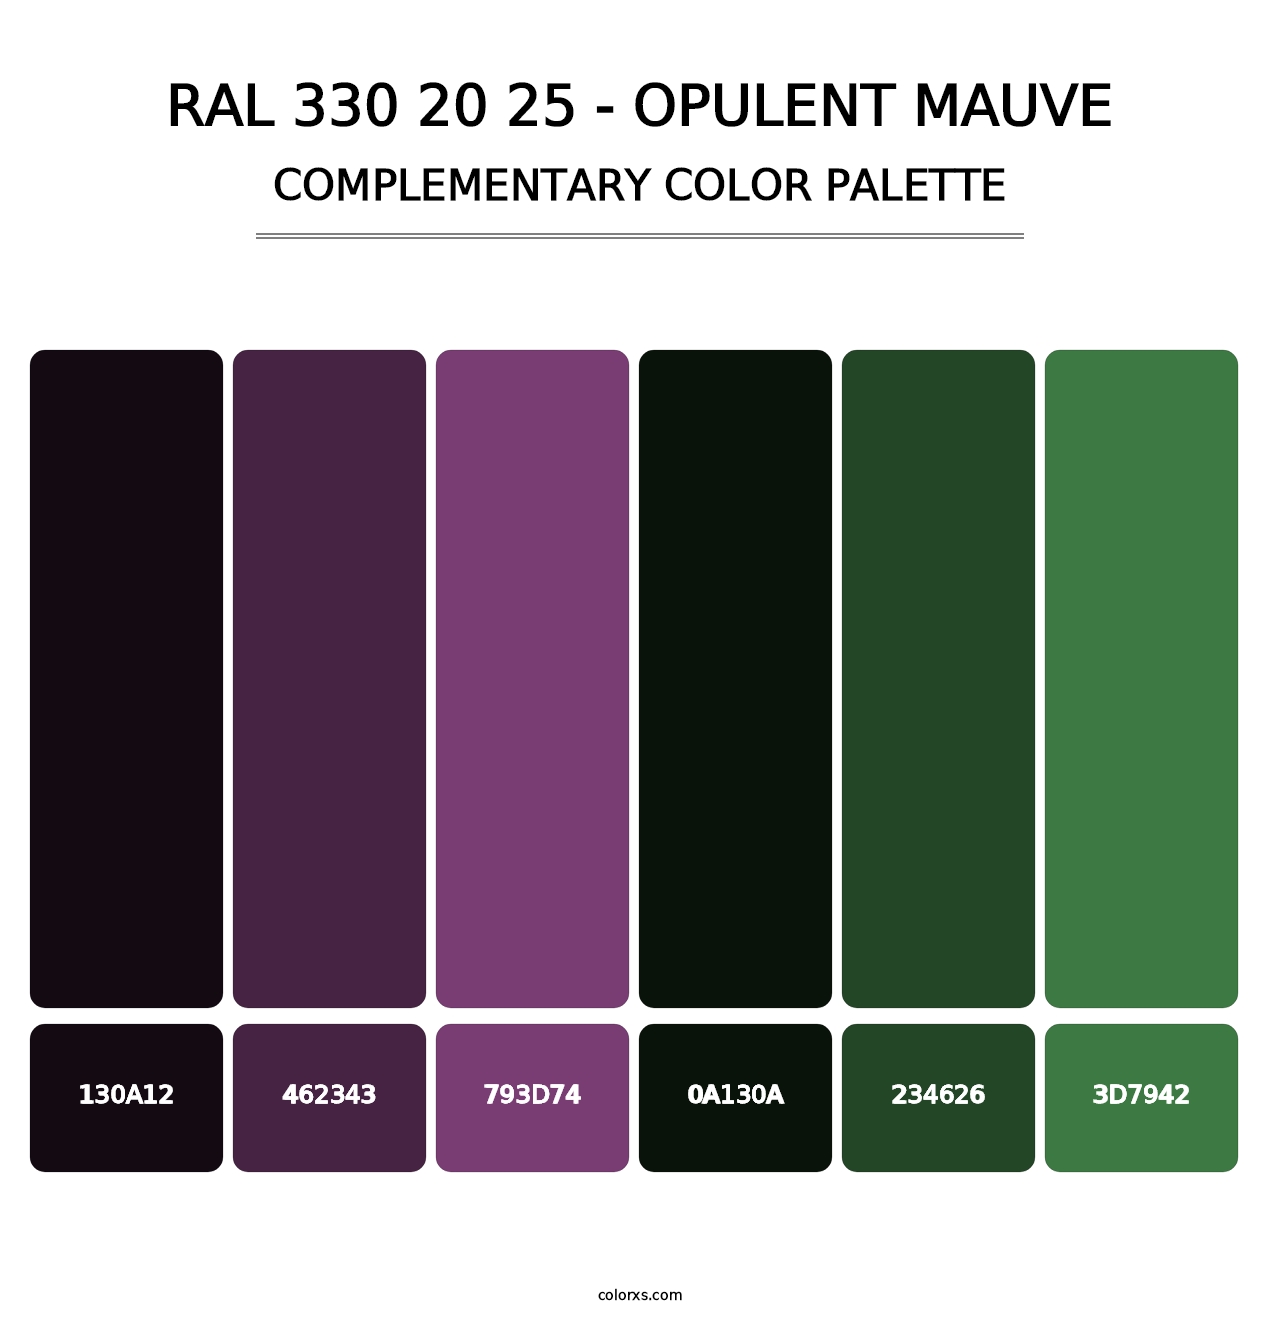 RAL 330 20 25 - Opulent Mauve - Complementary Color Palette